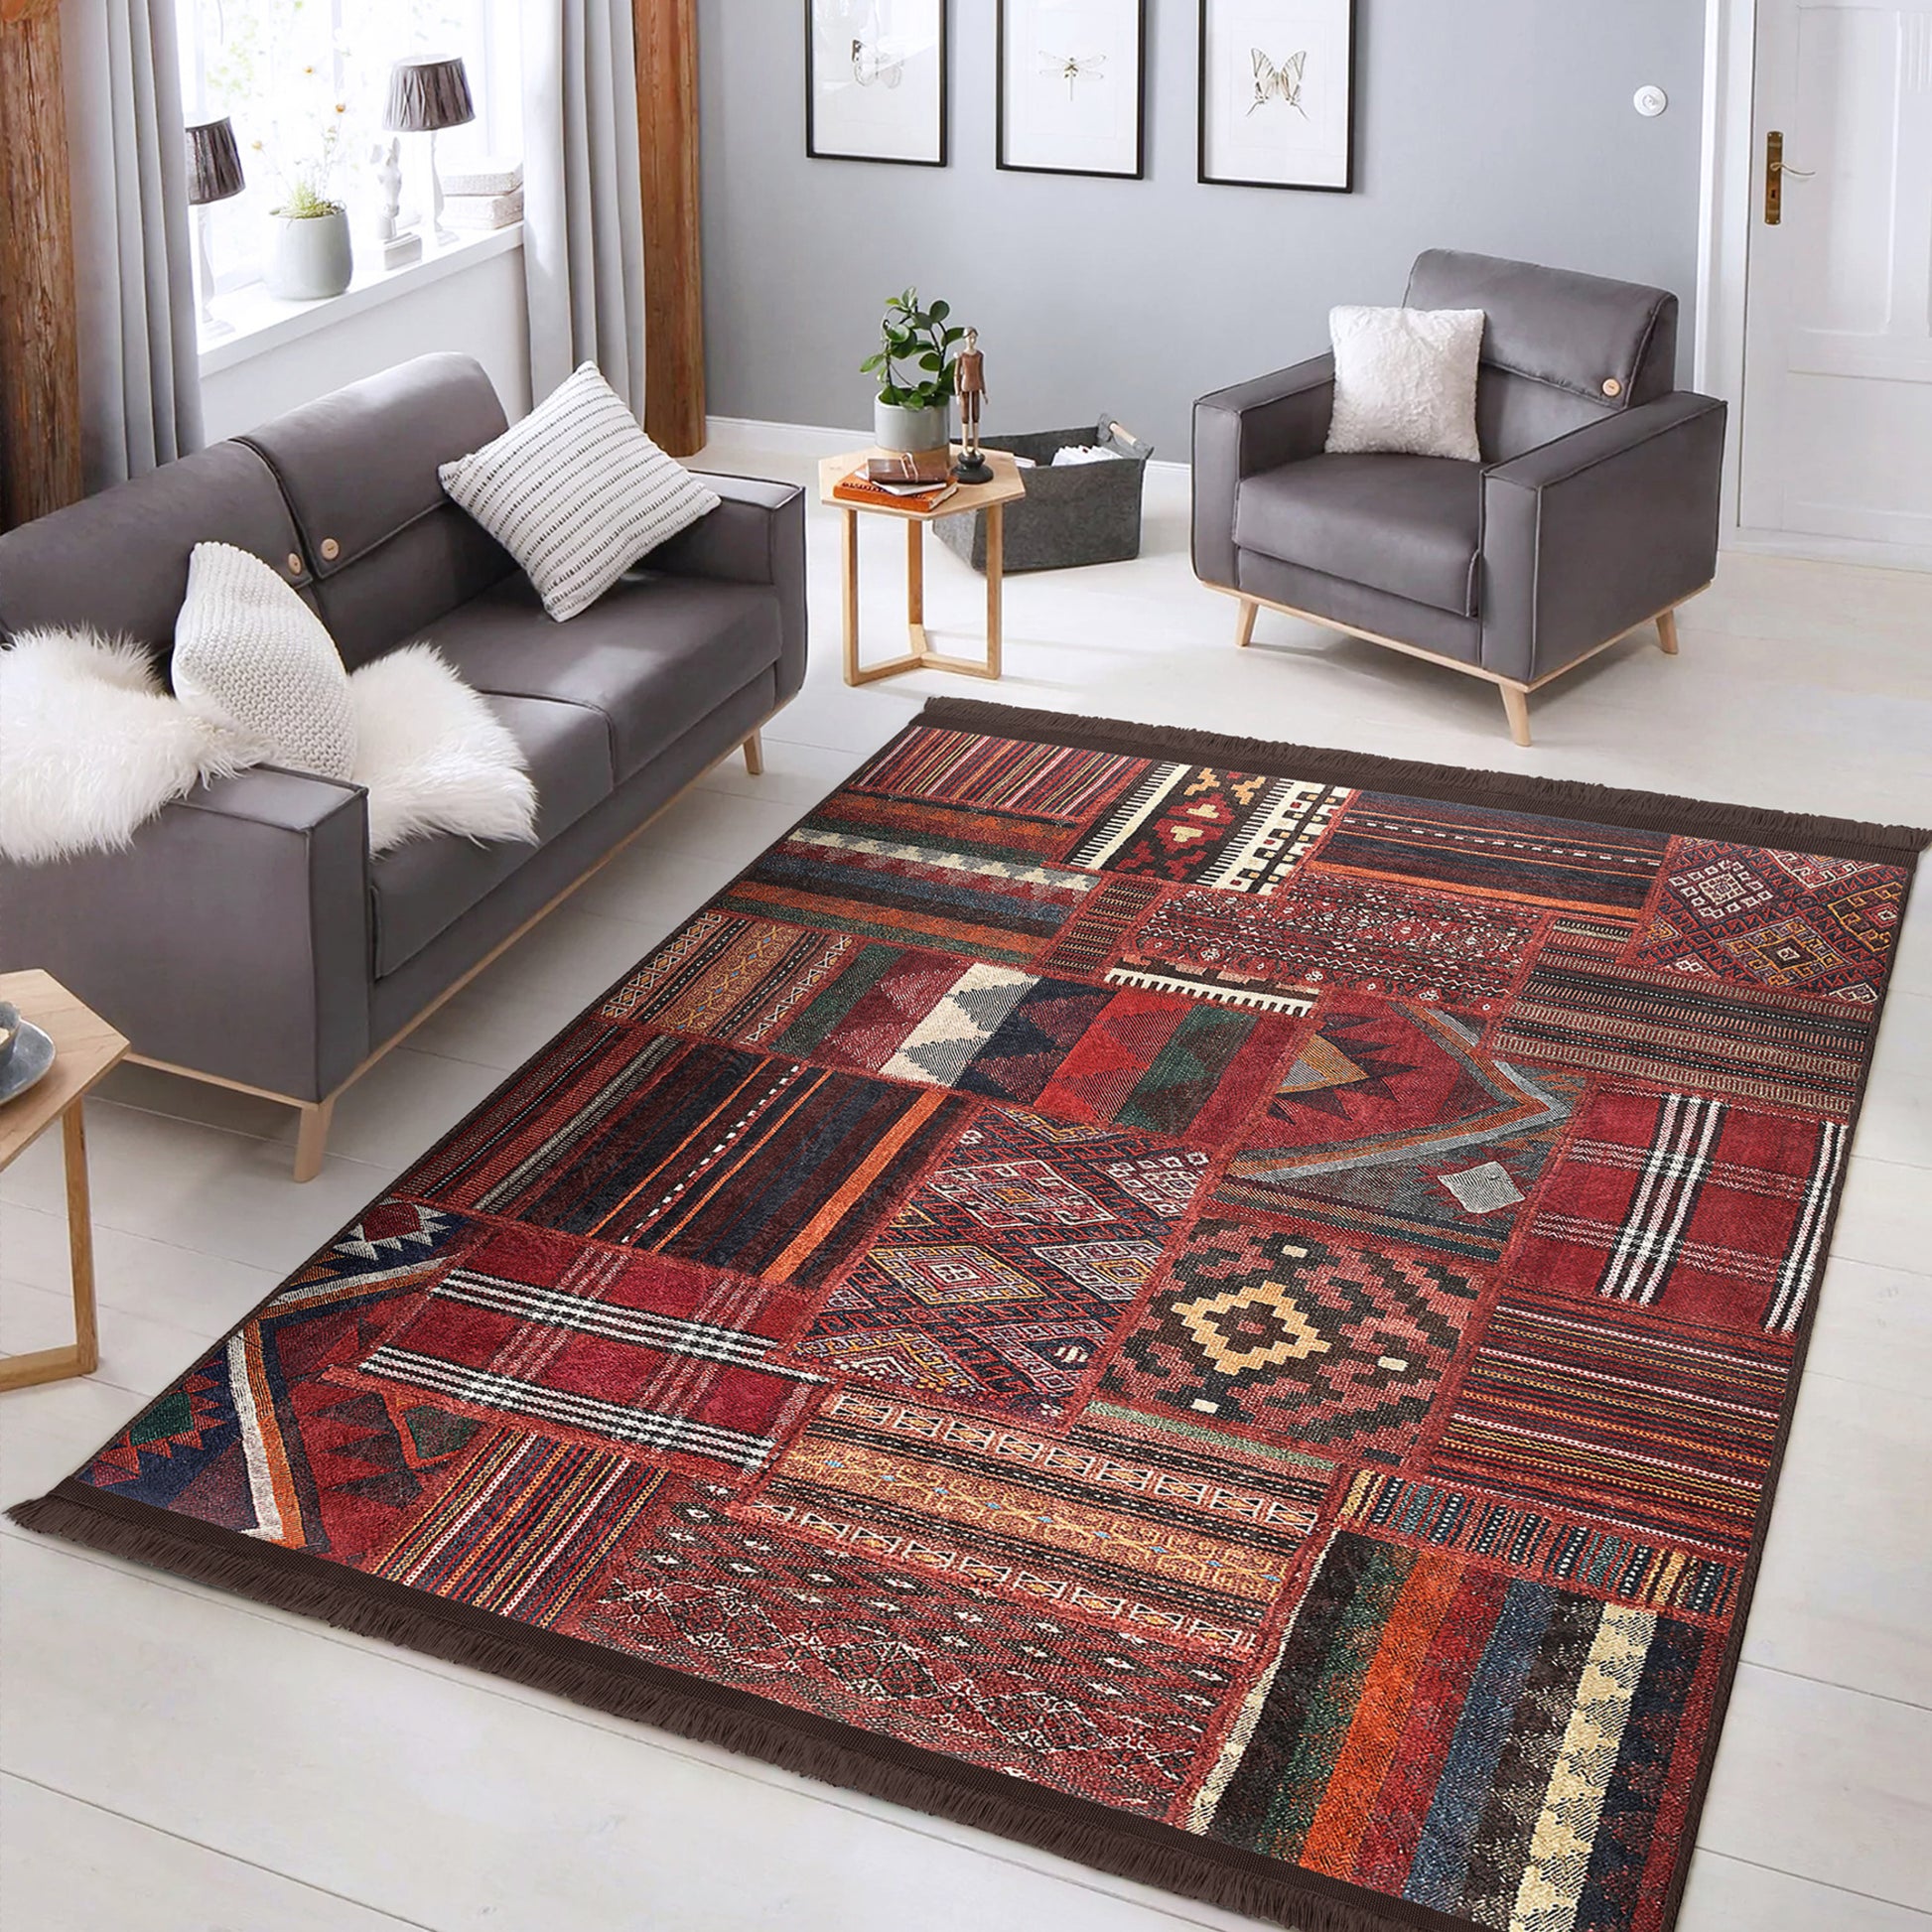 Cozy Living Room Carpet - Vibrant Red Hue